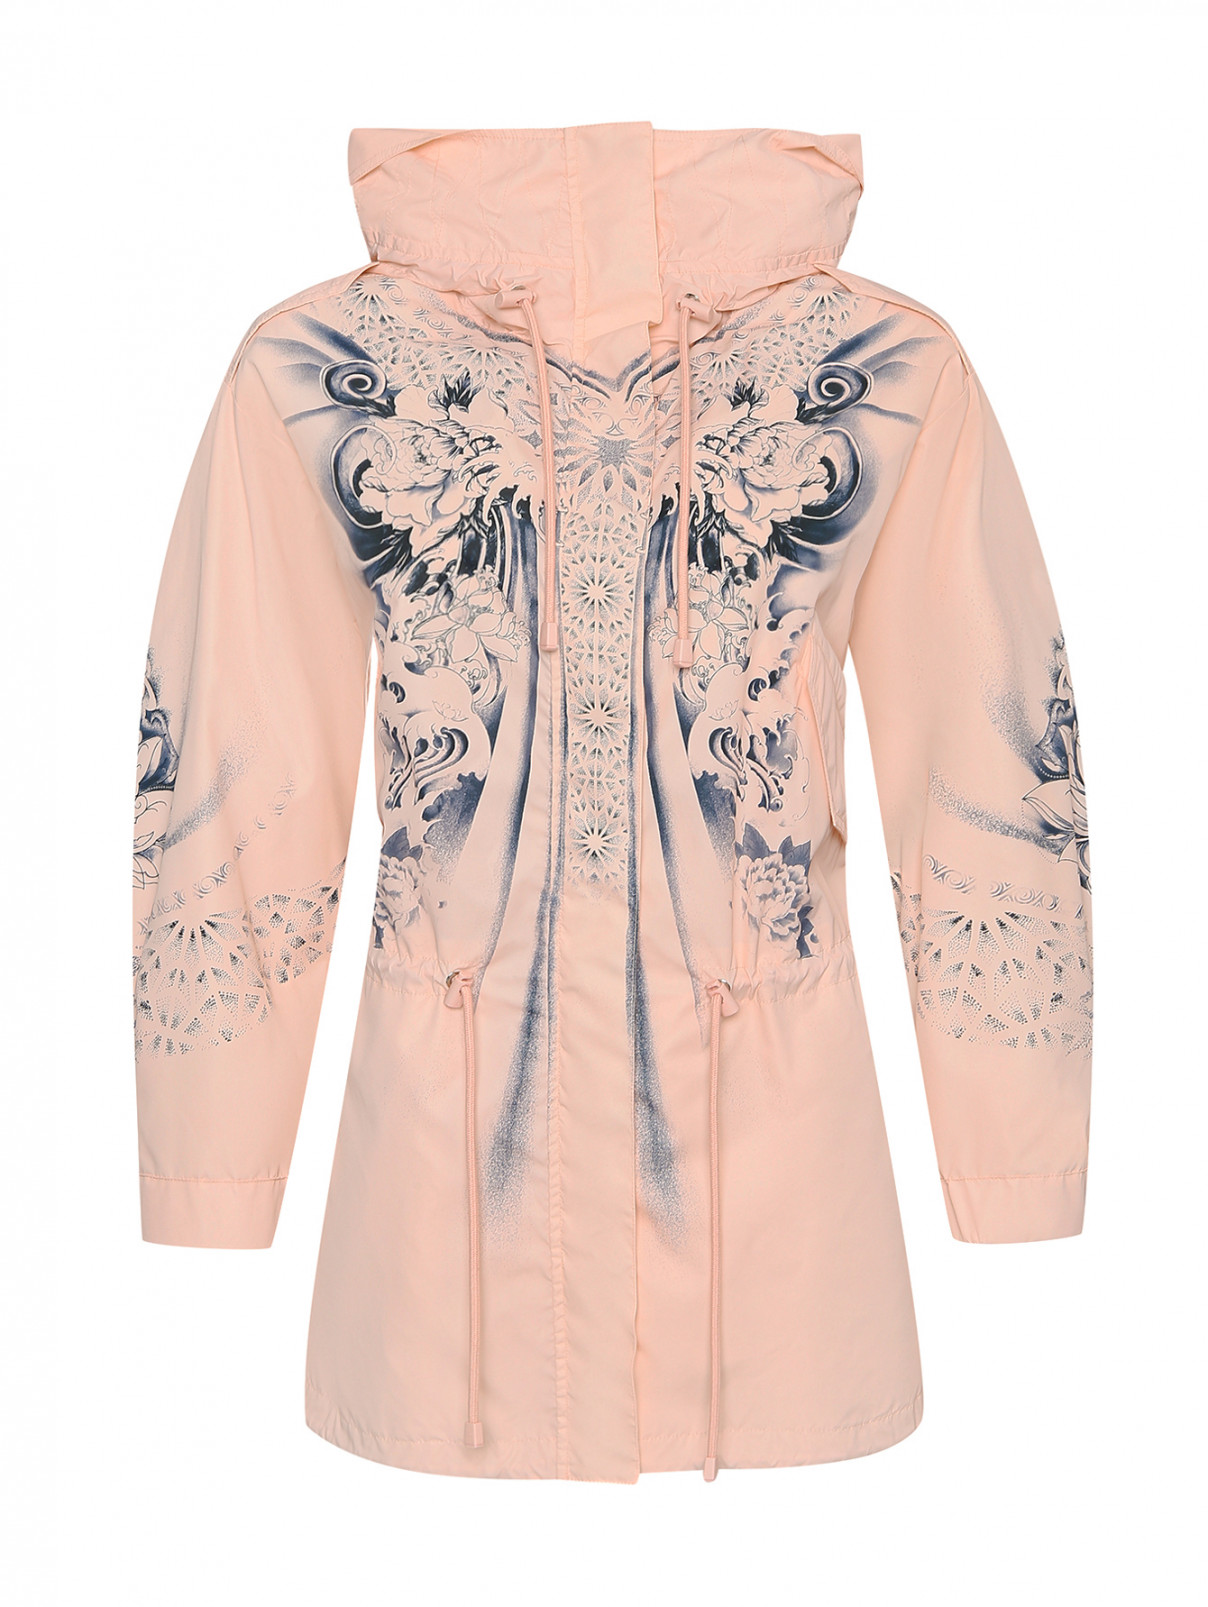 Куртка на молнии с карманами Alberta Ferretti  –  Общий вид  – Цвет:  Розовый